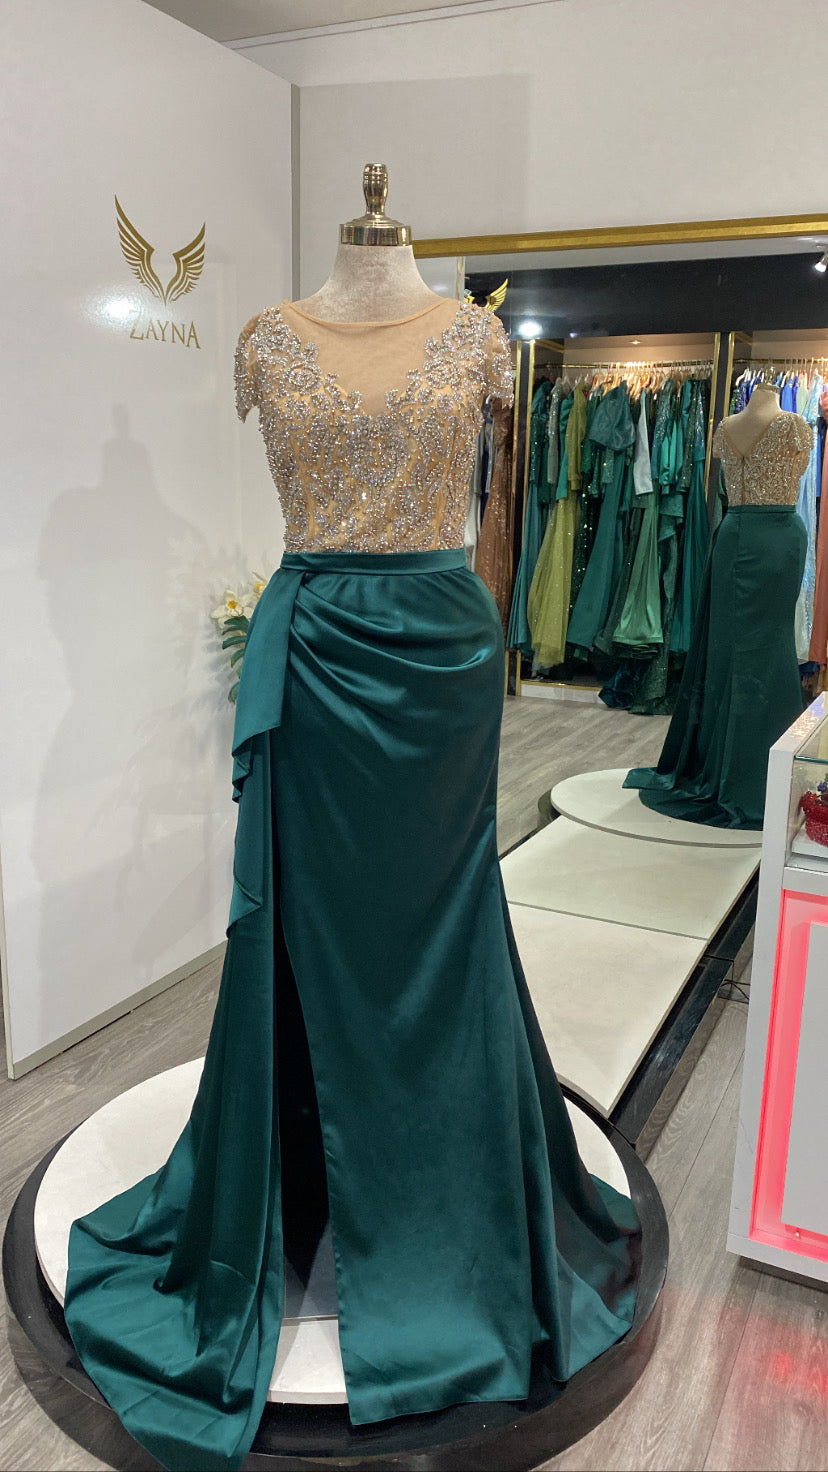 Elegant with pearls satin green dress